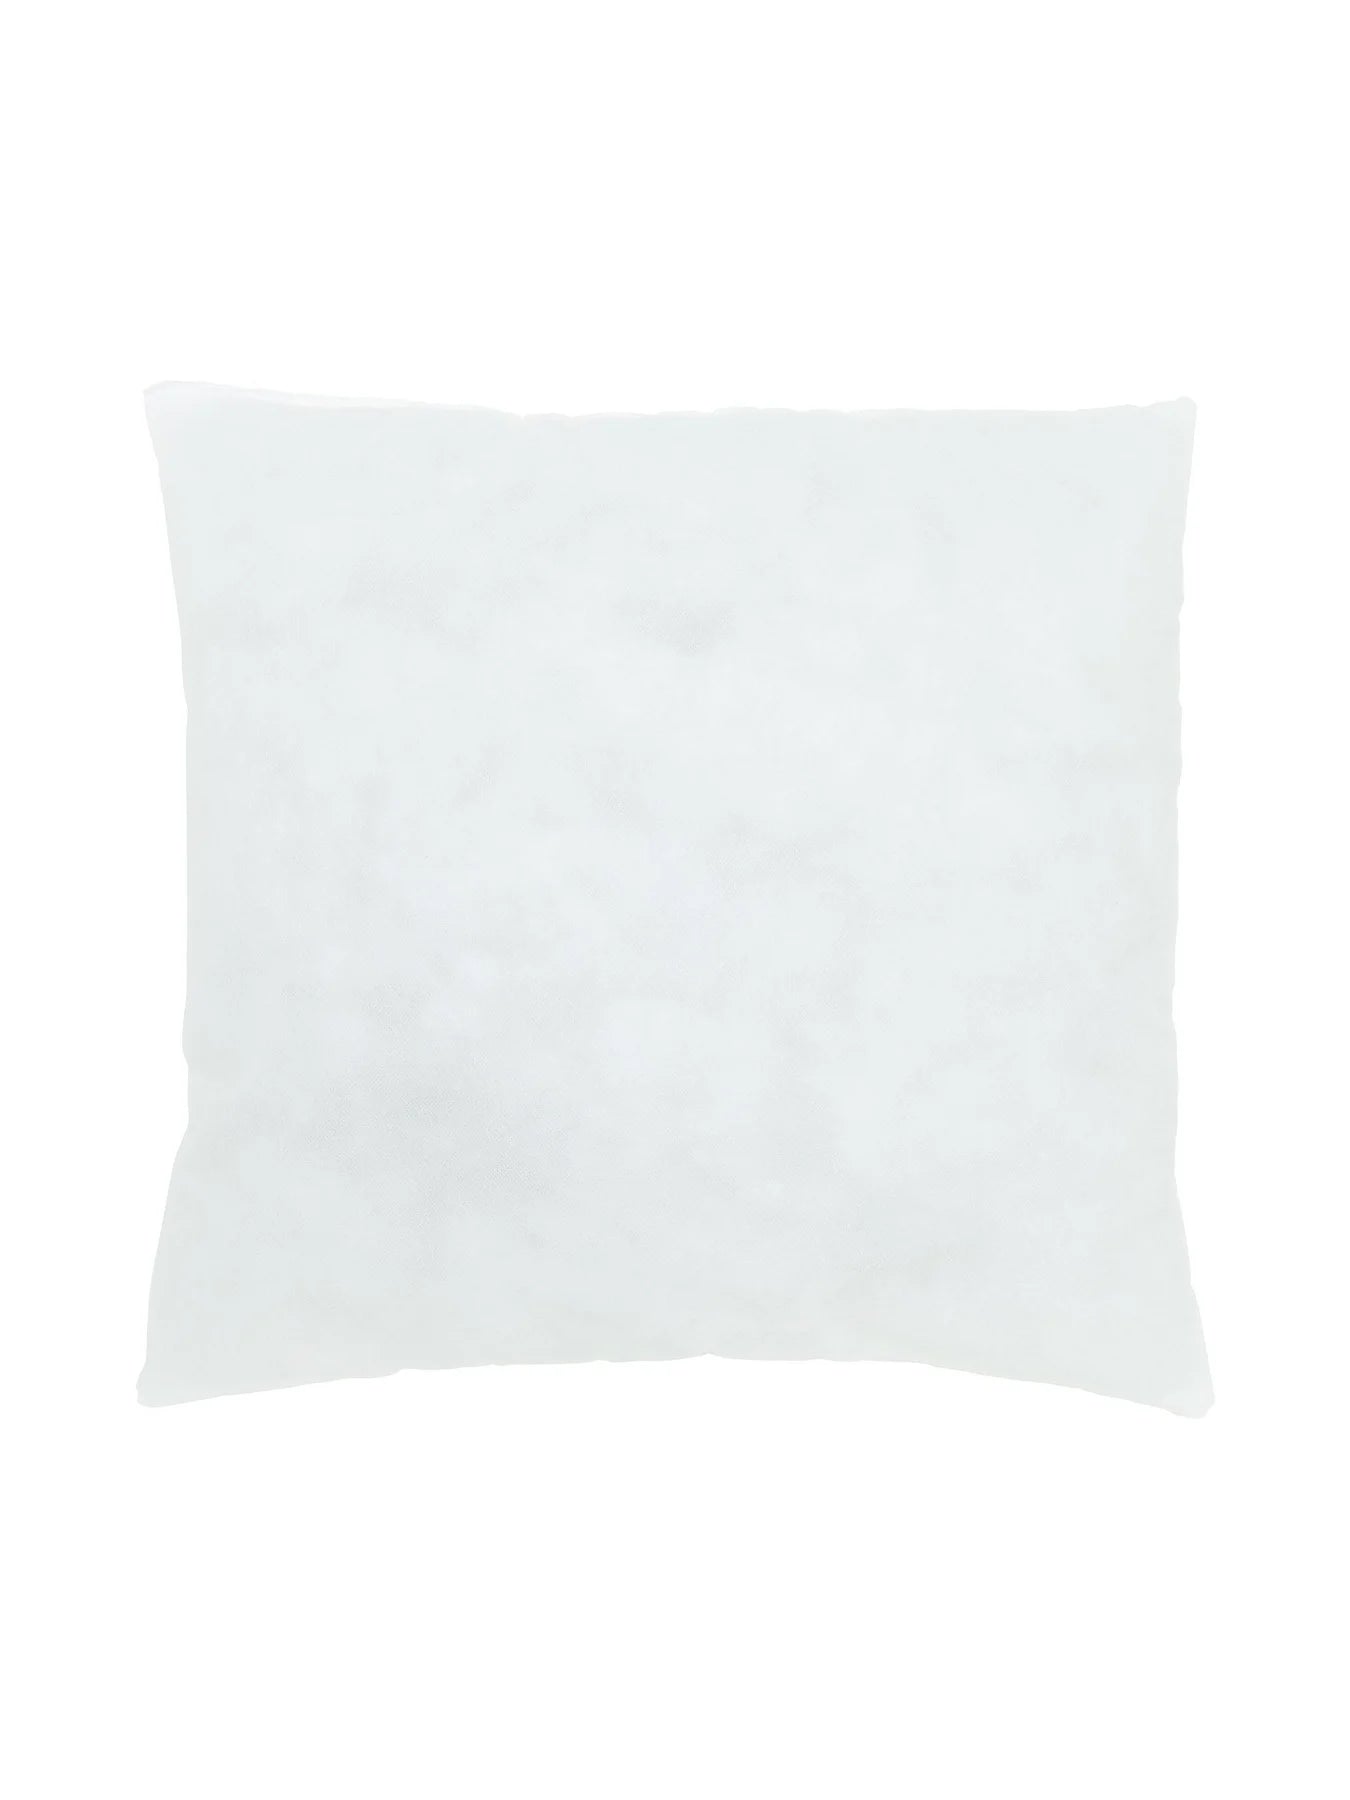 Anna's inner pillow polyester core